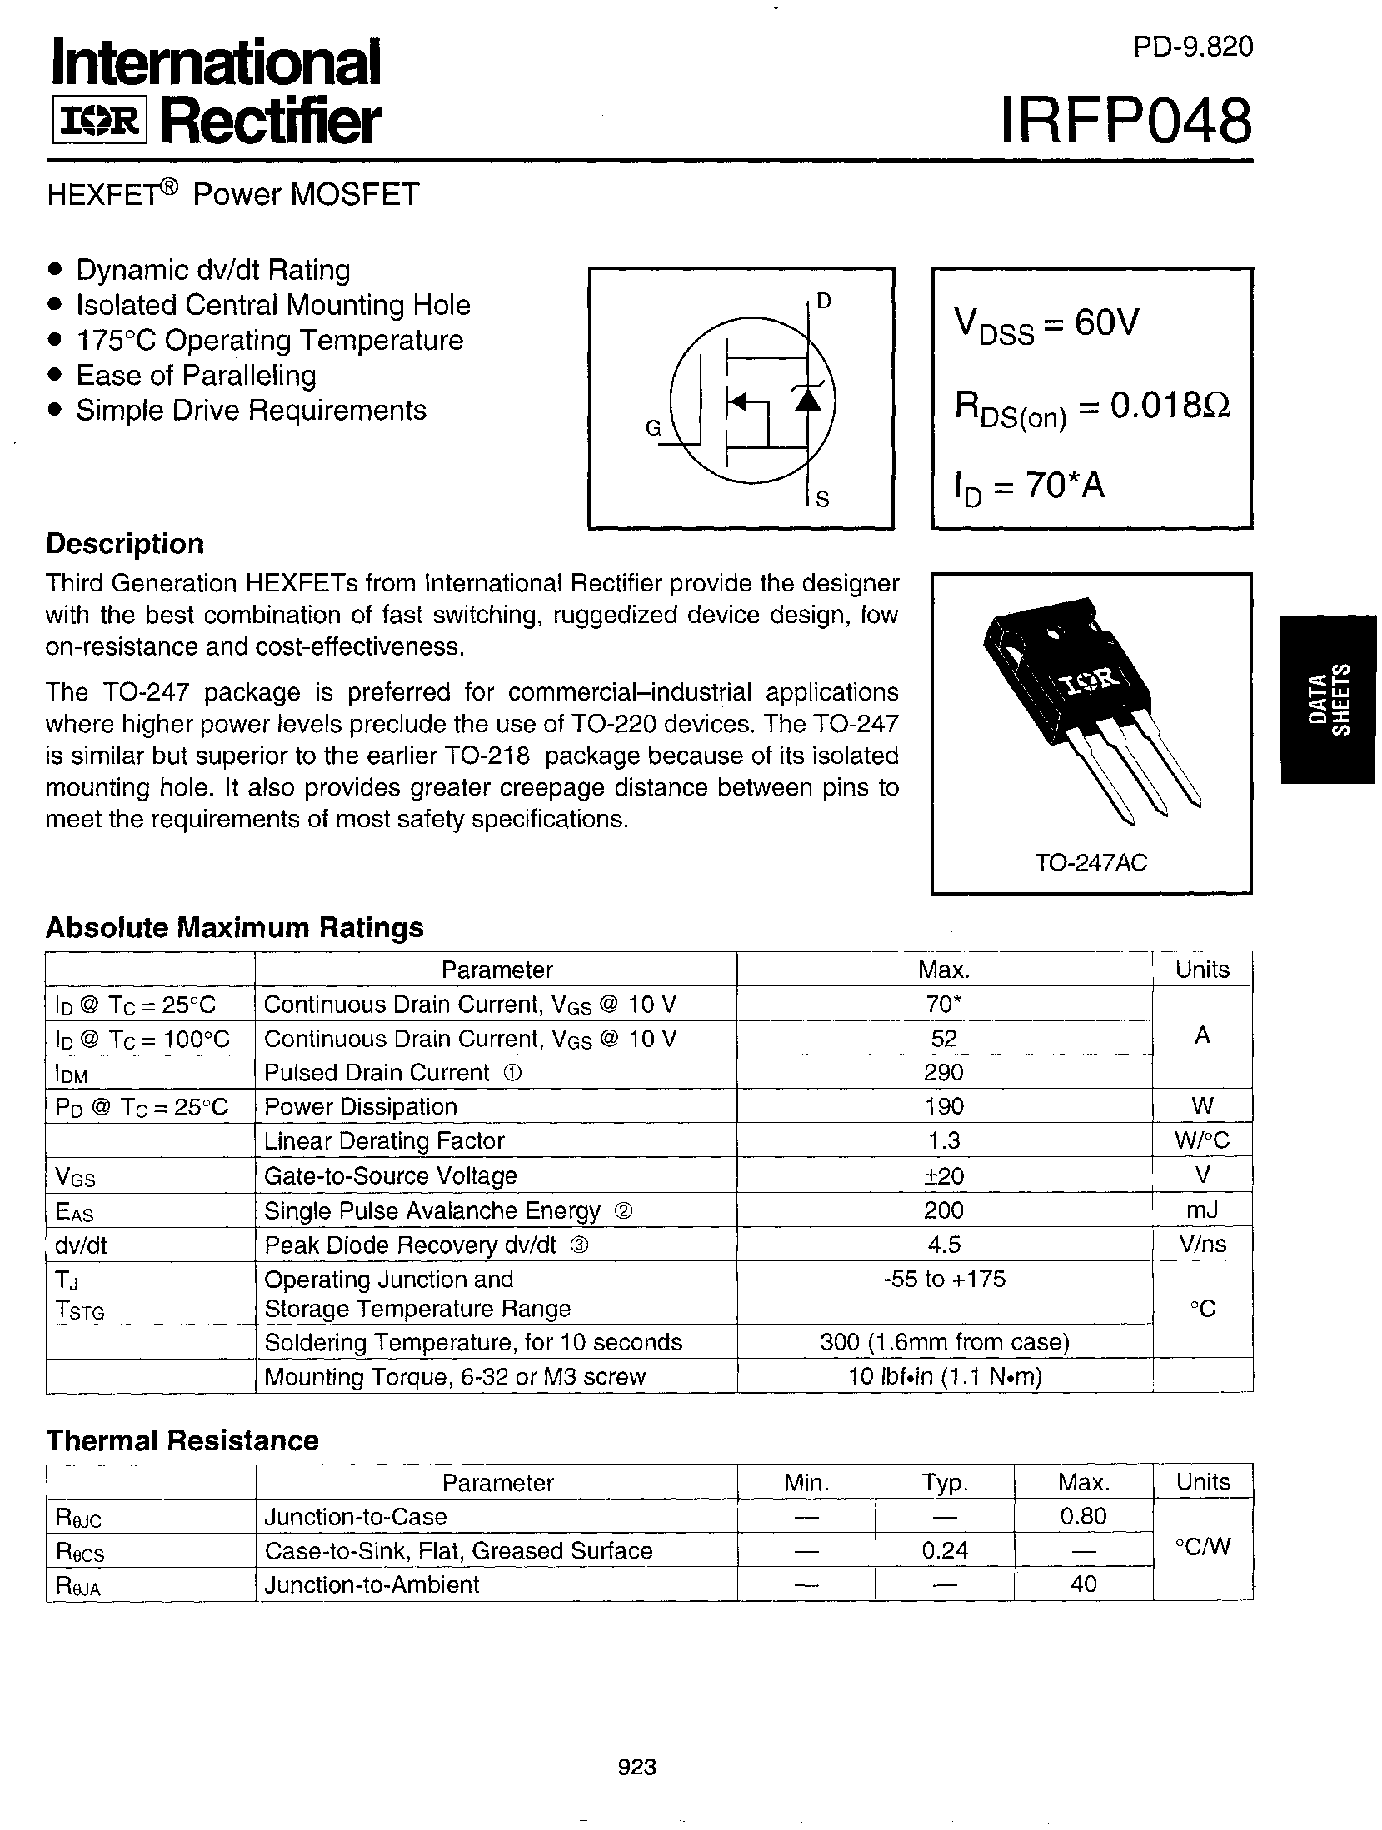 Datasheet IRFP048 - Power MOSFET page 1